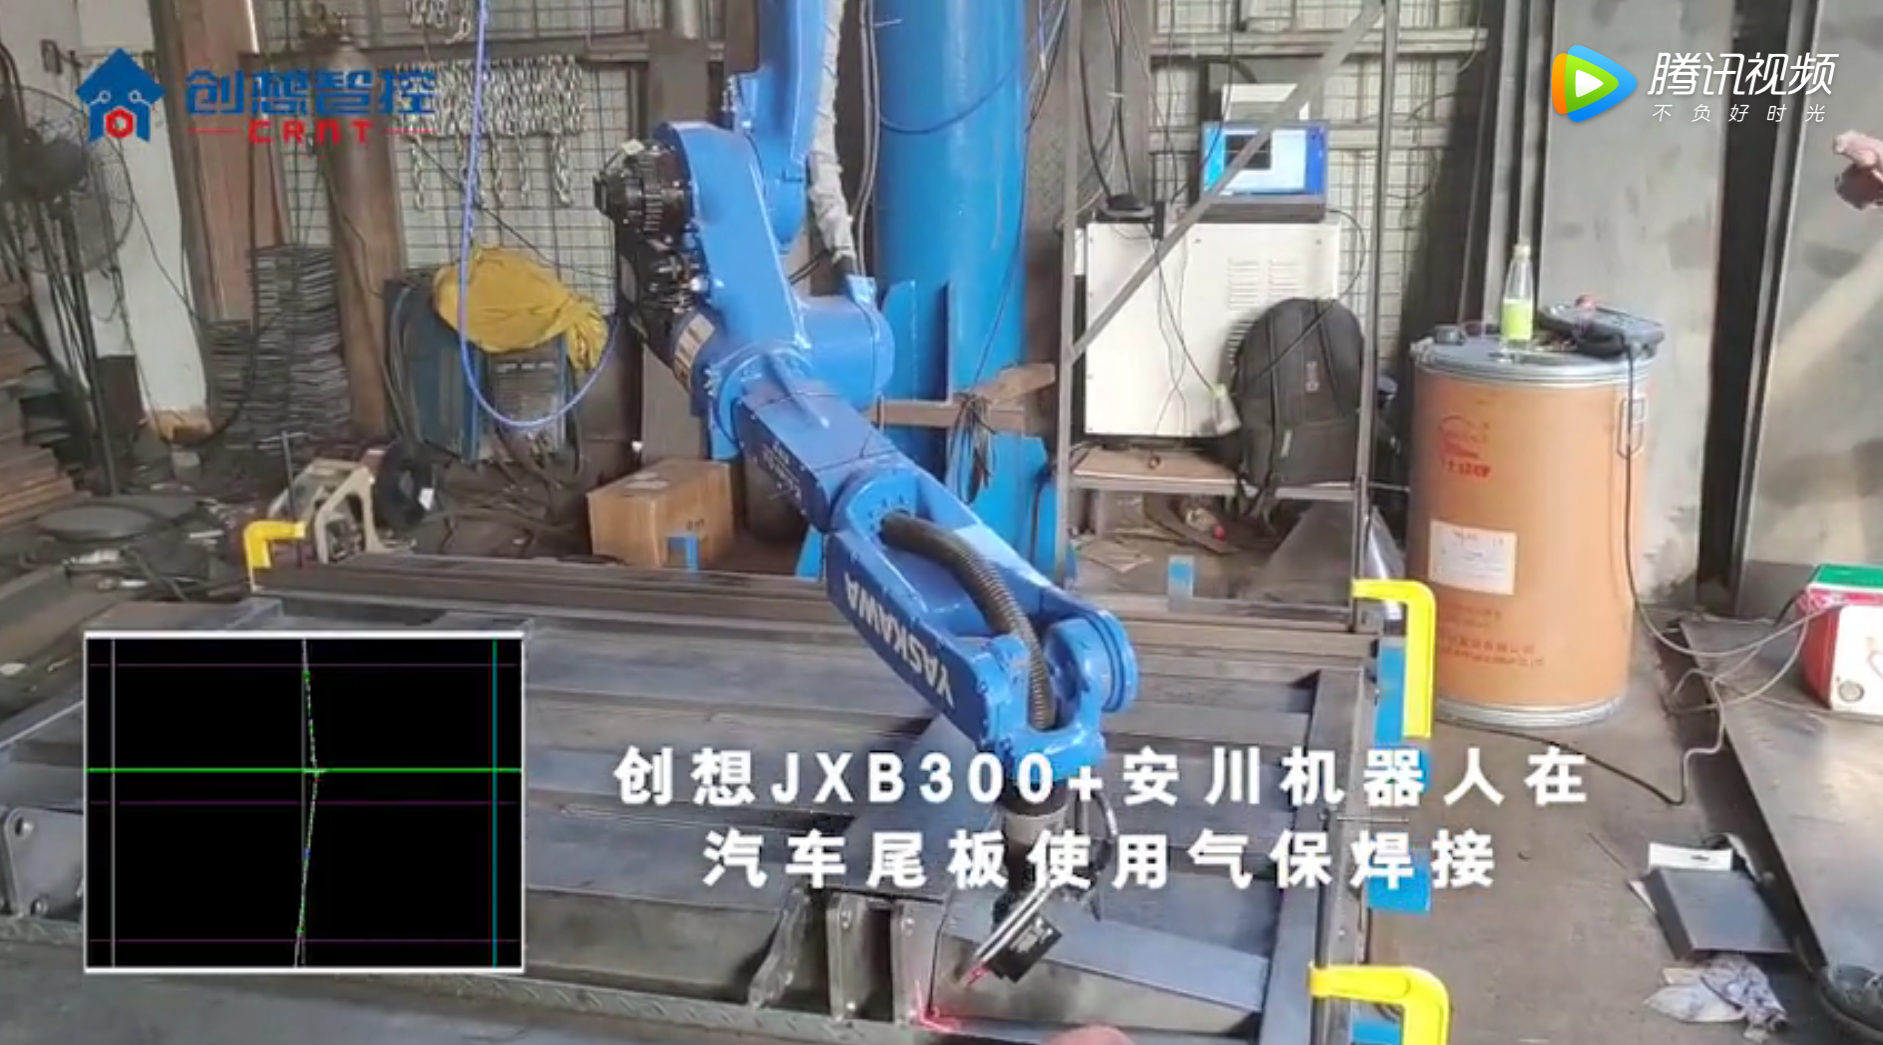  JXB300+安川机器人在汽车尾板使用气保焊接实现四点求交点、点位组合应用